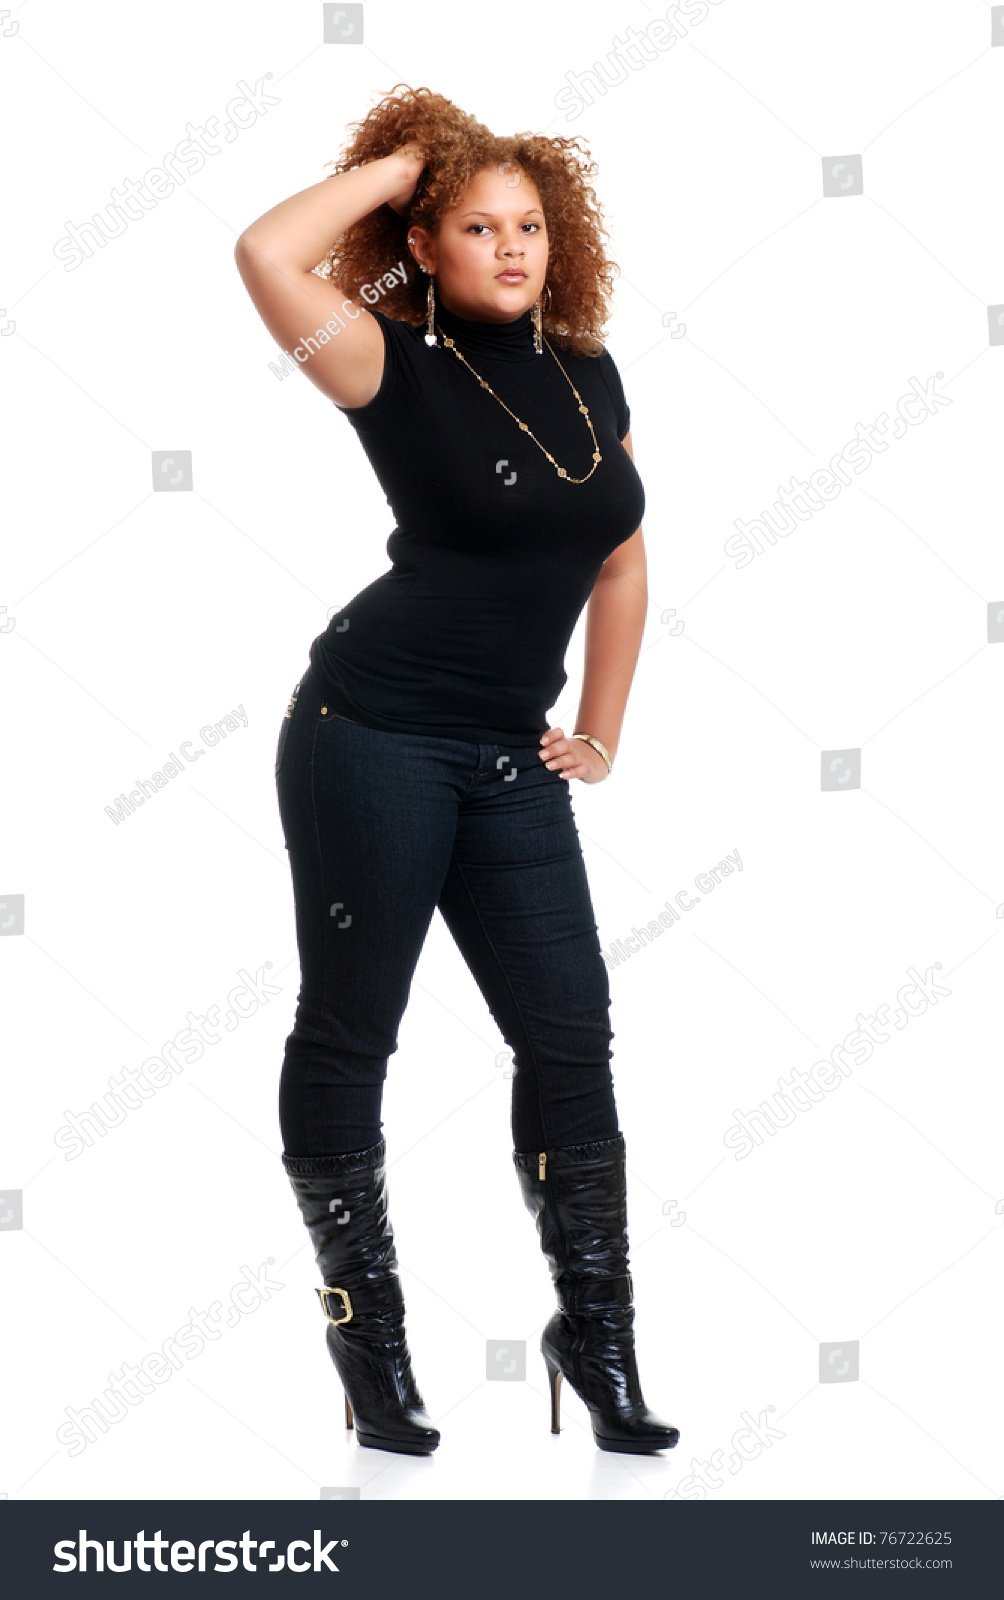 Woman Wearing Black High Heel Boots 